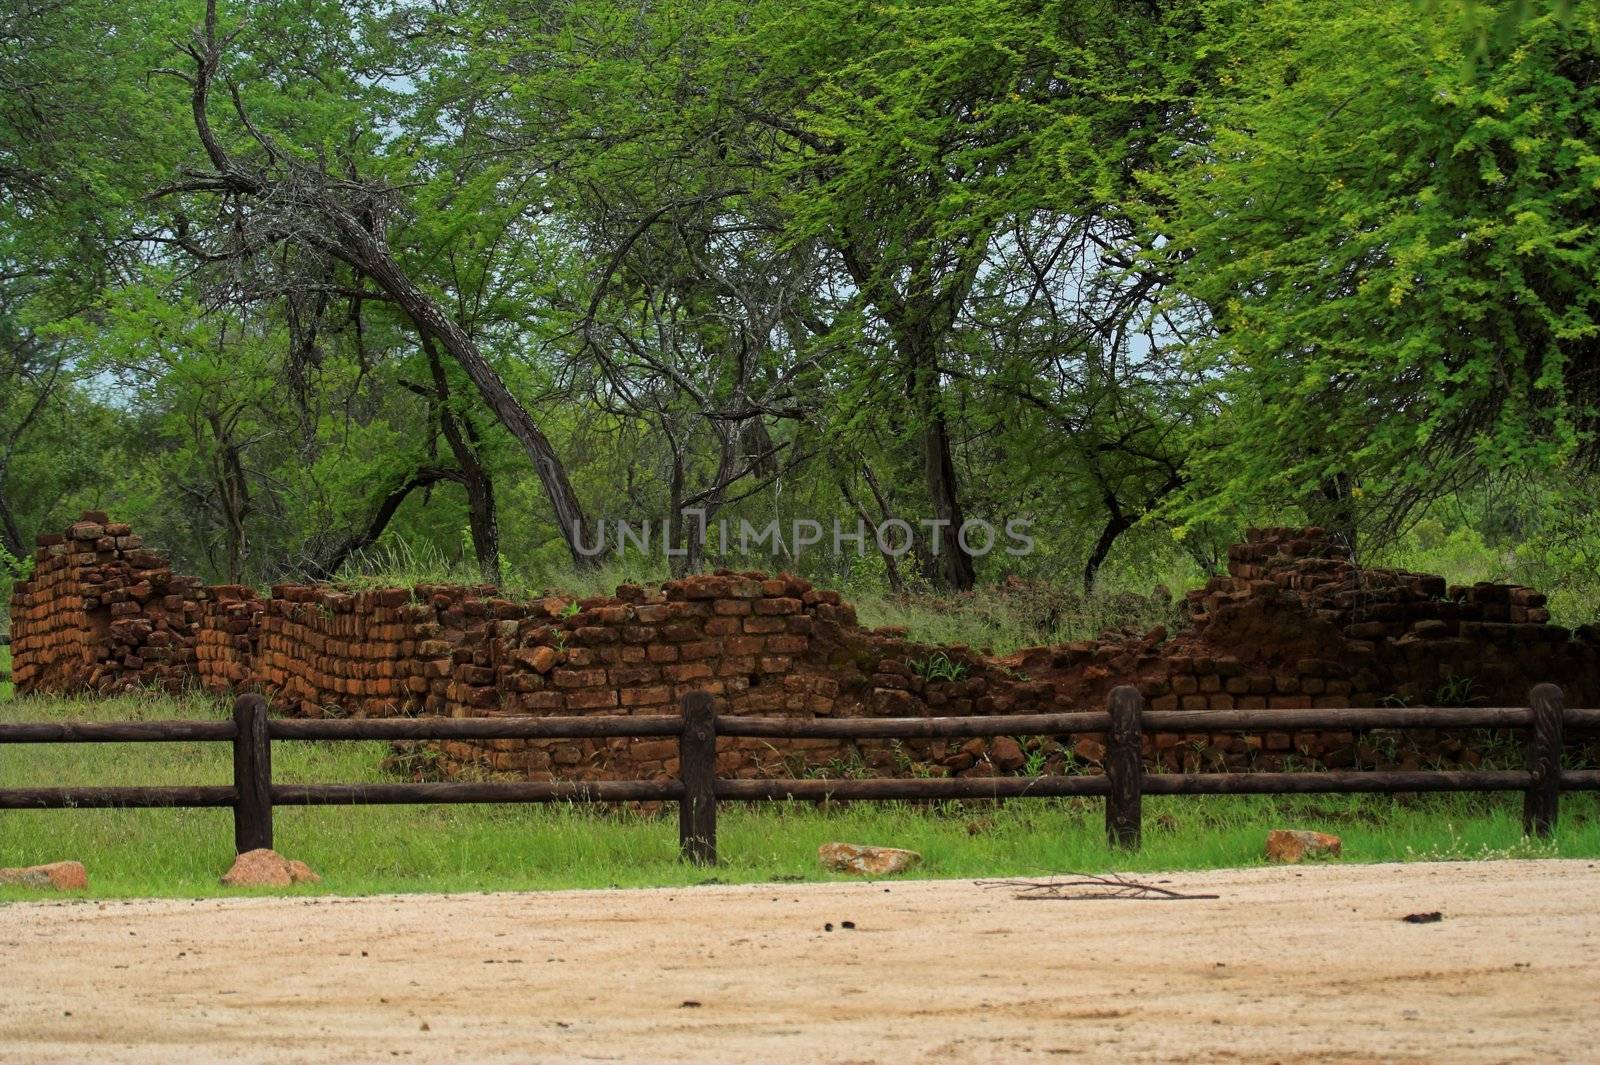 Tradepost ruins in the Kruger National Park